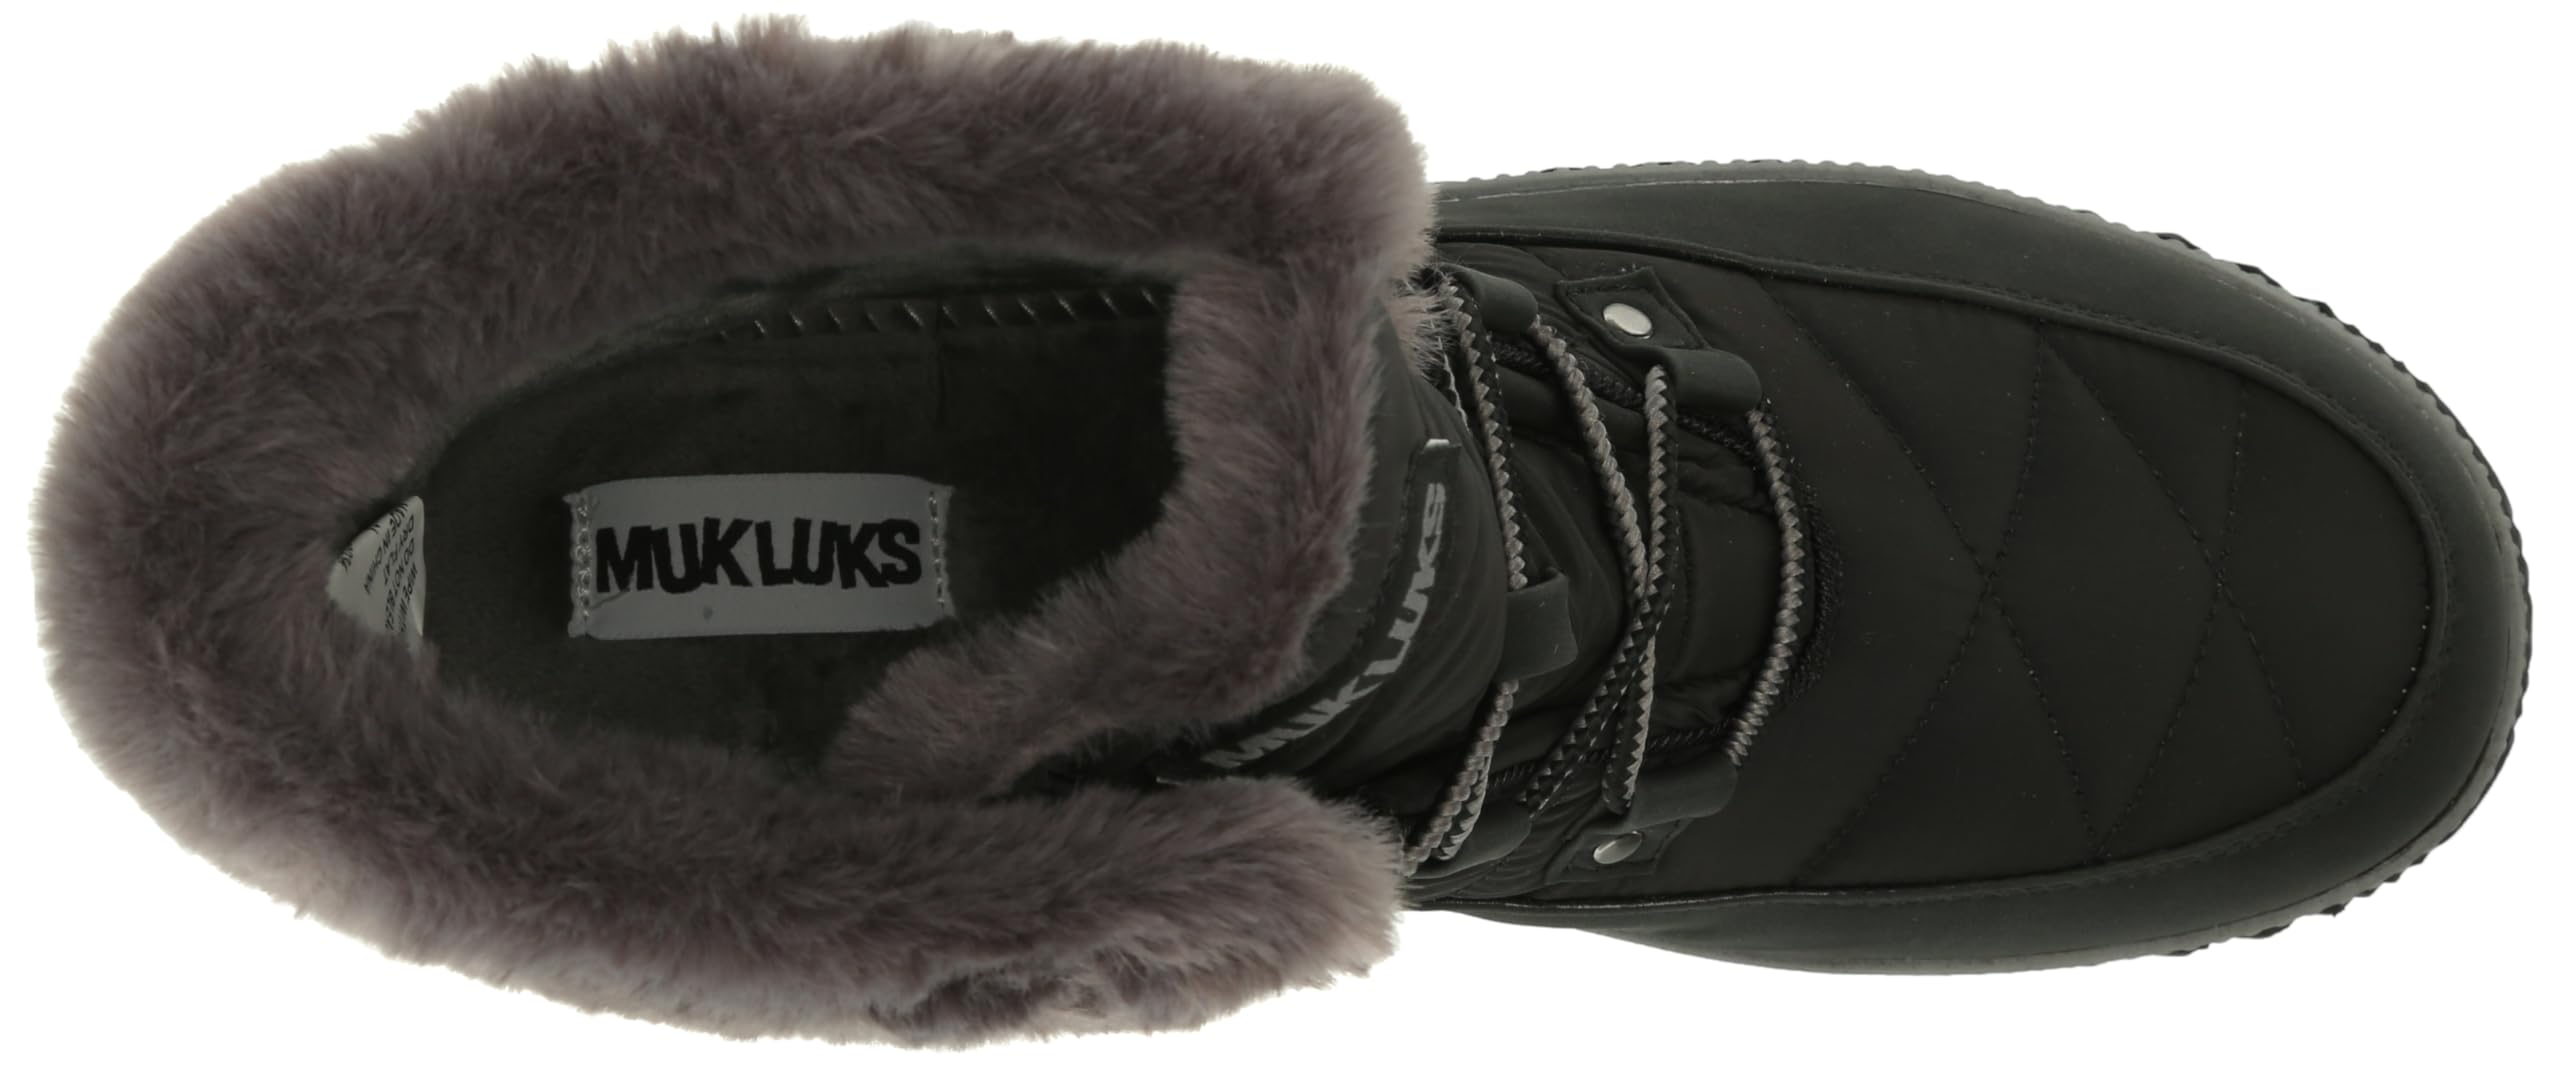 MUK LUKS Women's Winnie Waverly Fashion Boot